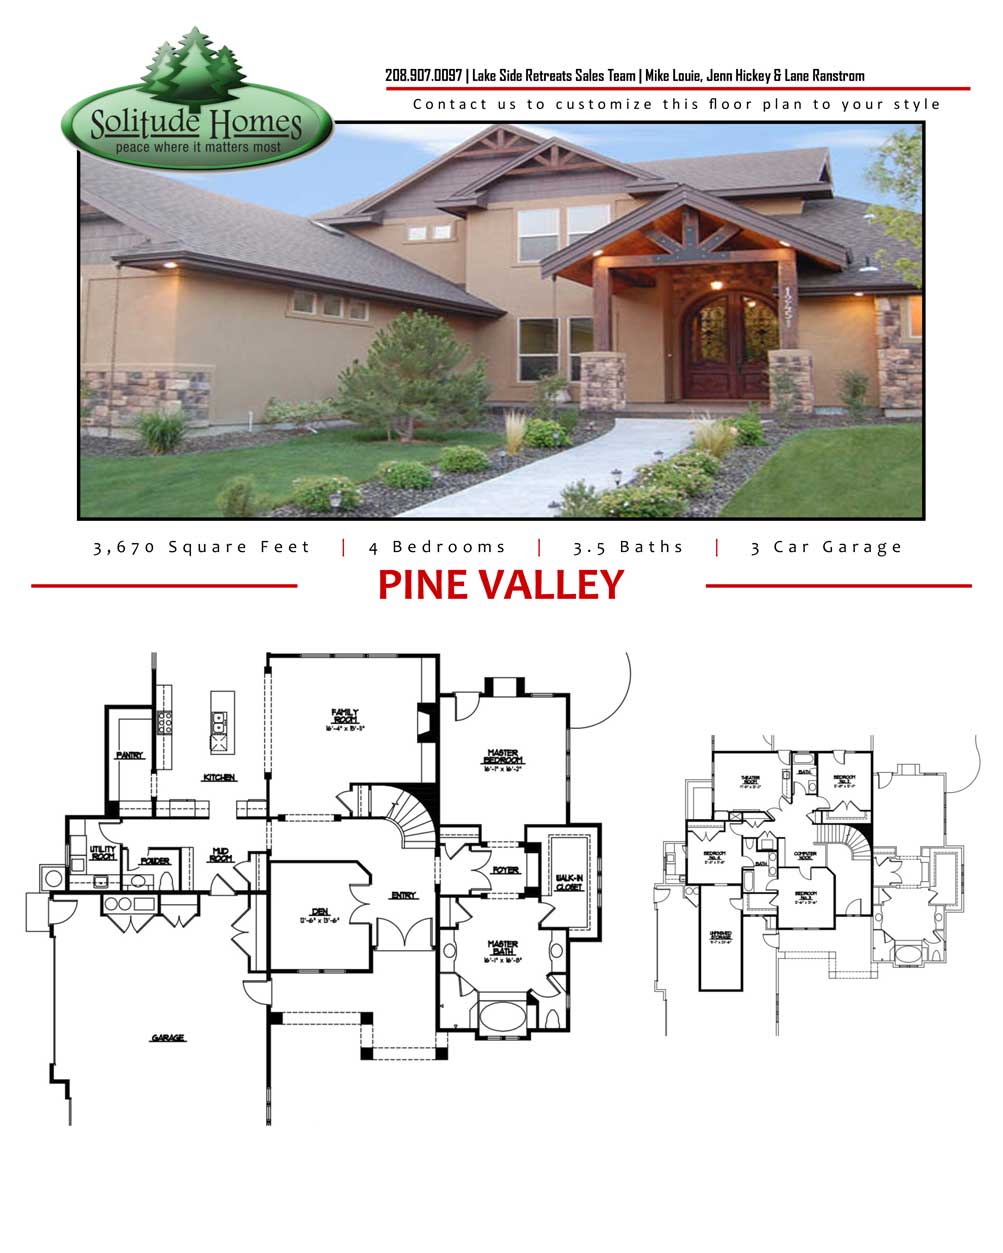 Pine-Valley-Flyer | Solitude Homes | Idaho Home Builder ...